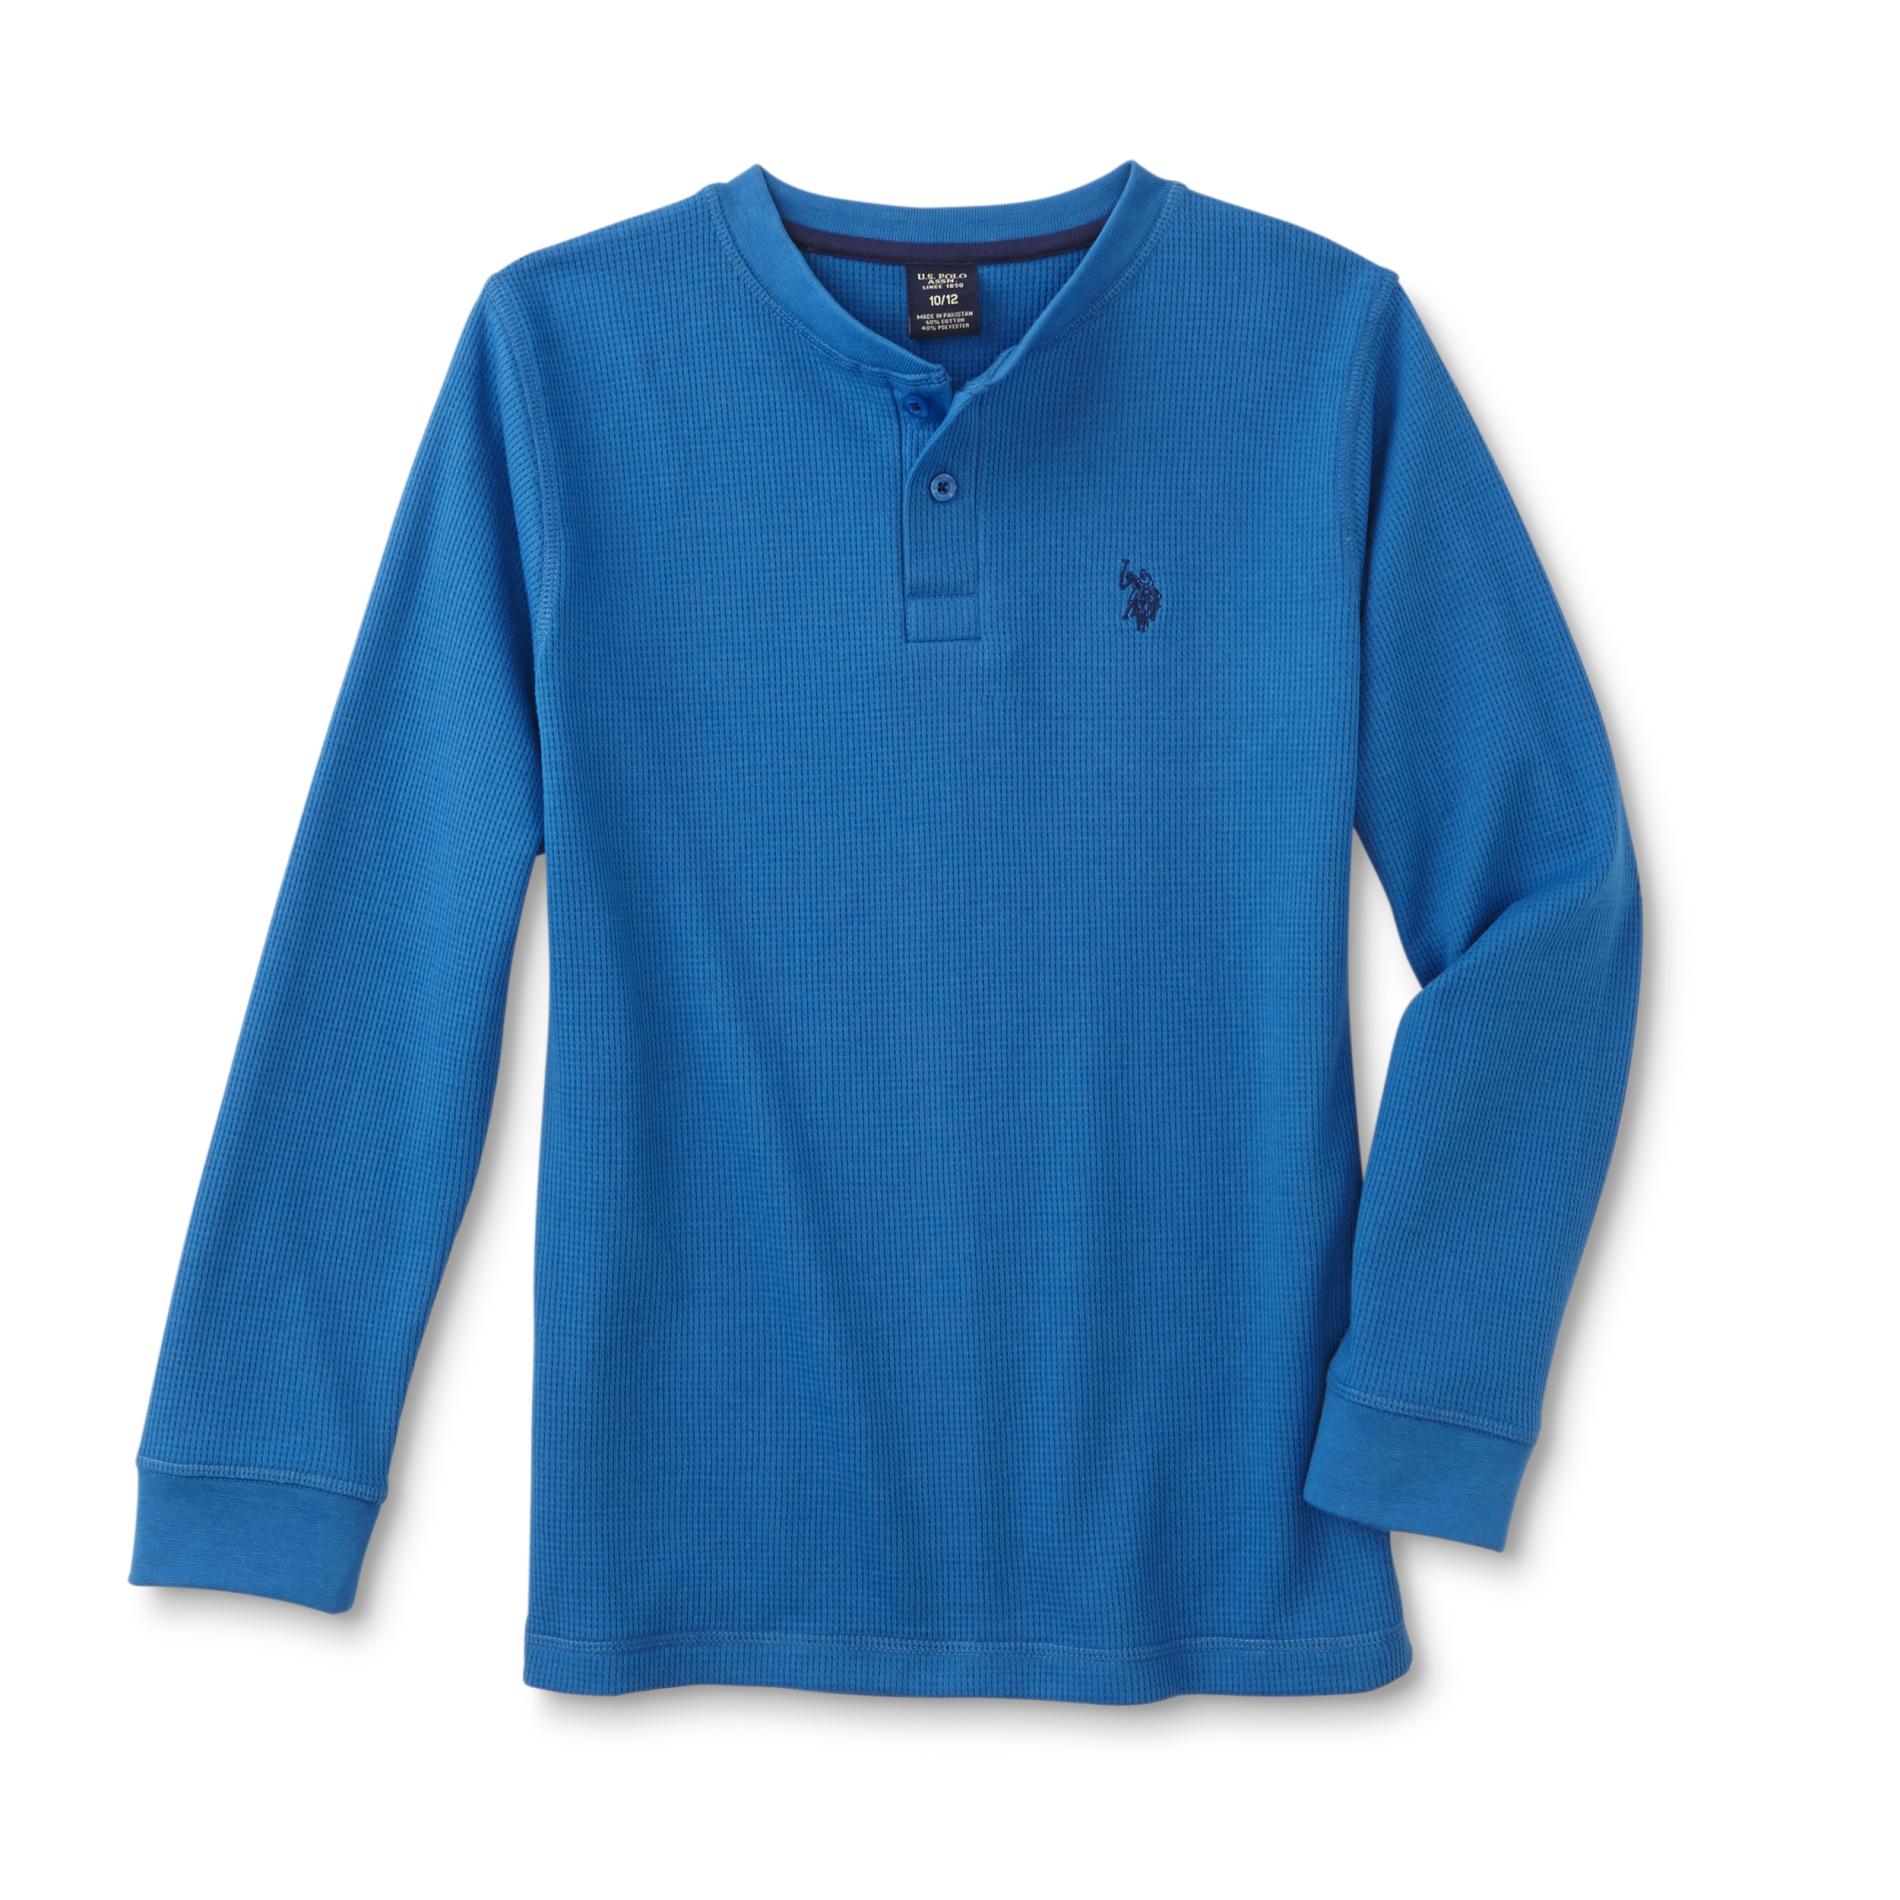 U.S. Polo Assn. Boy's Thermal Henley Shirt